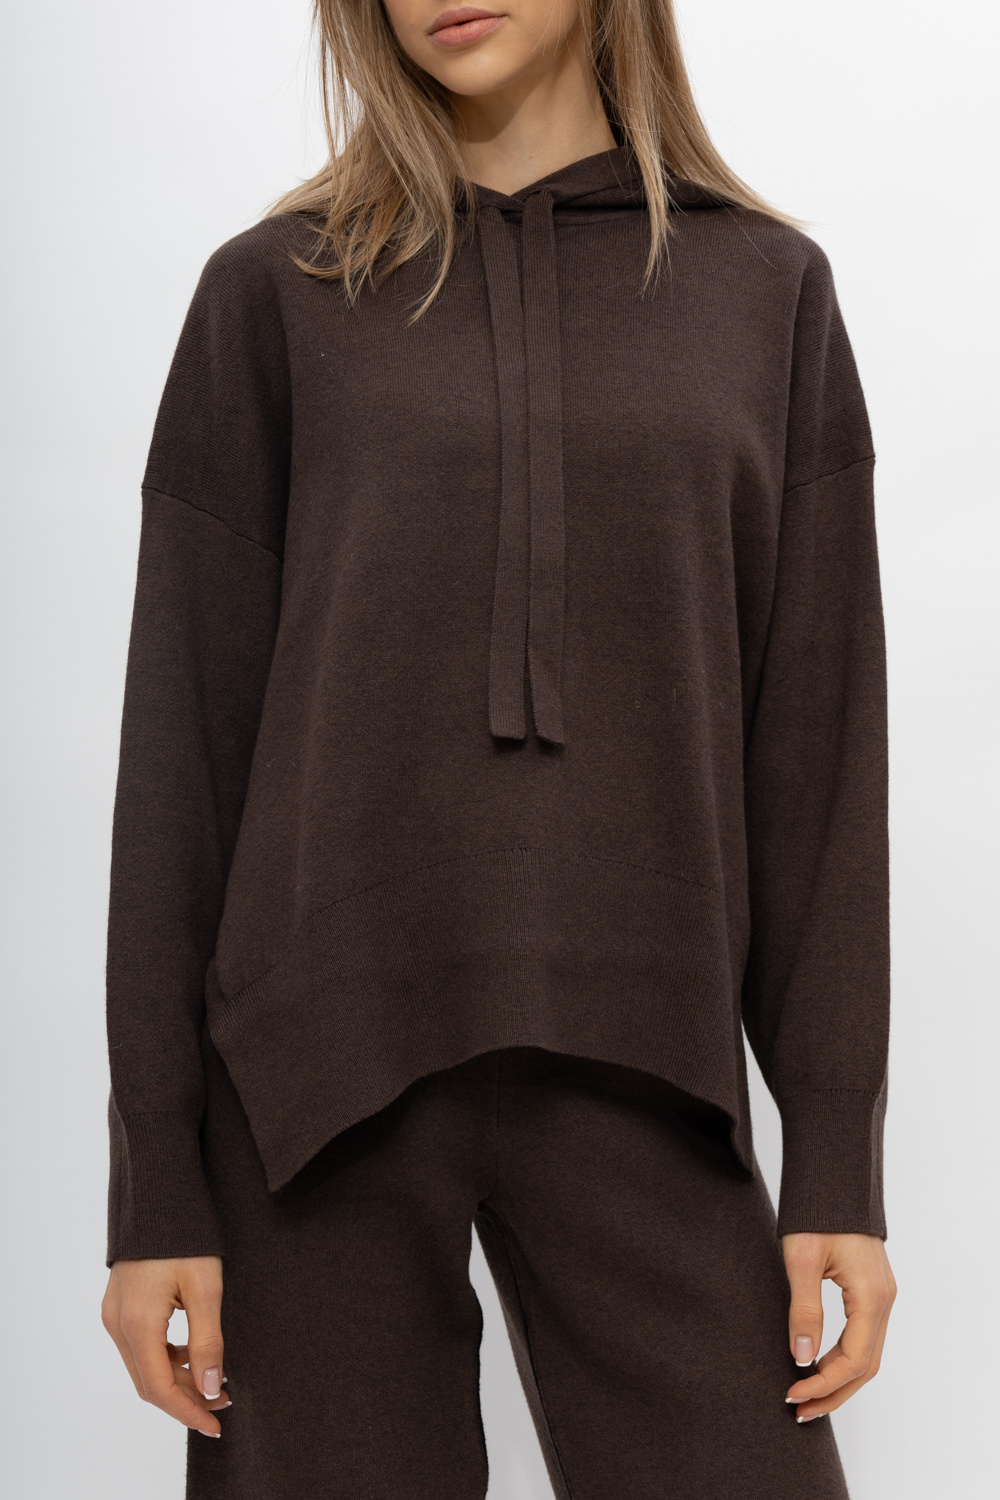 Proenza Schouler Brogues & Oxfords for Women Cotton hoodie